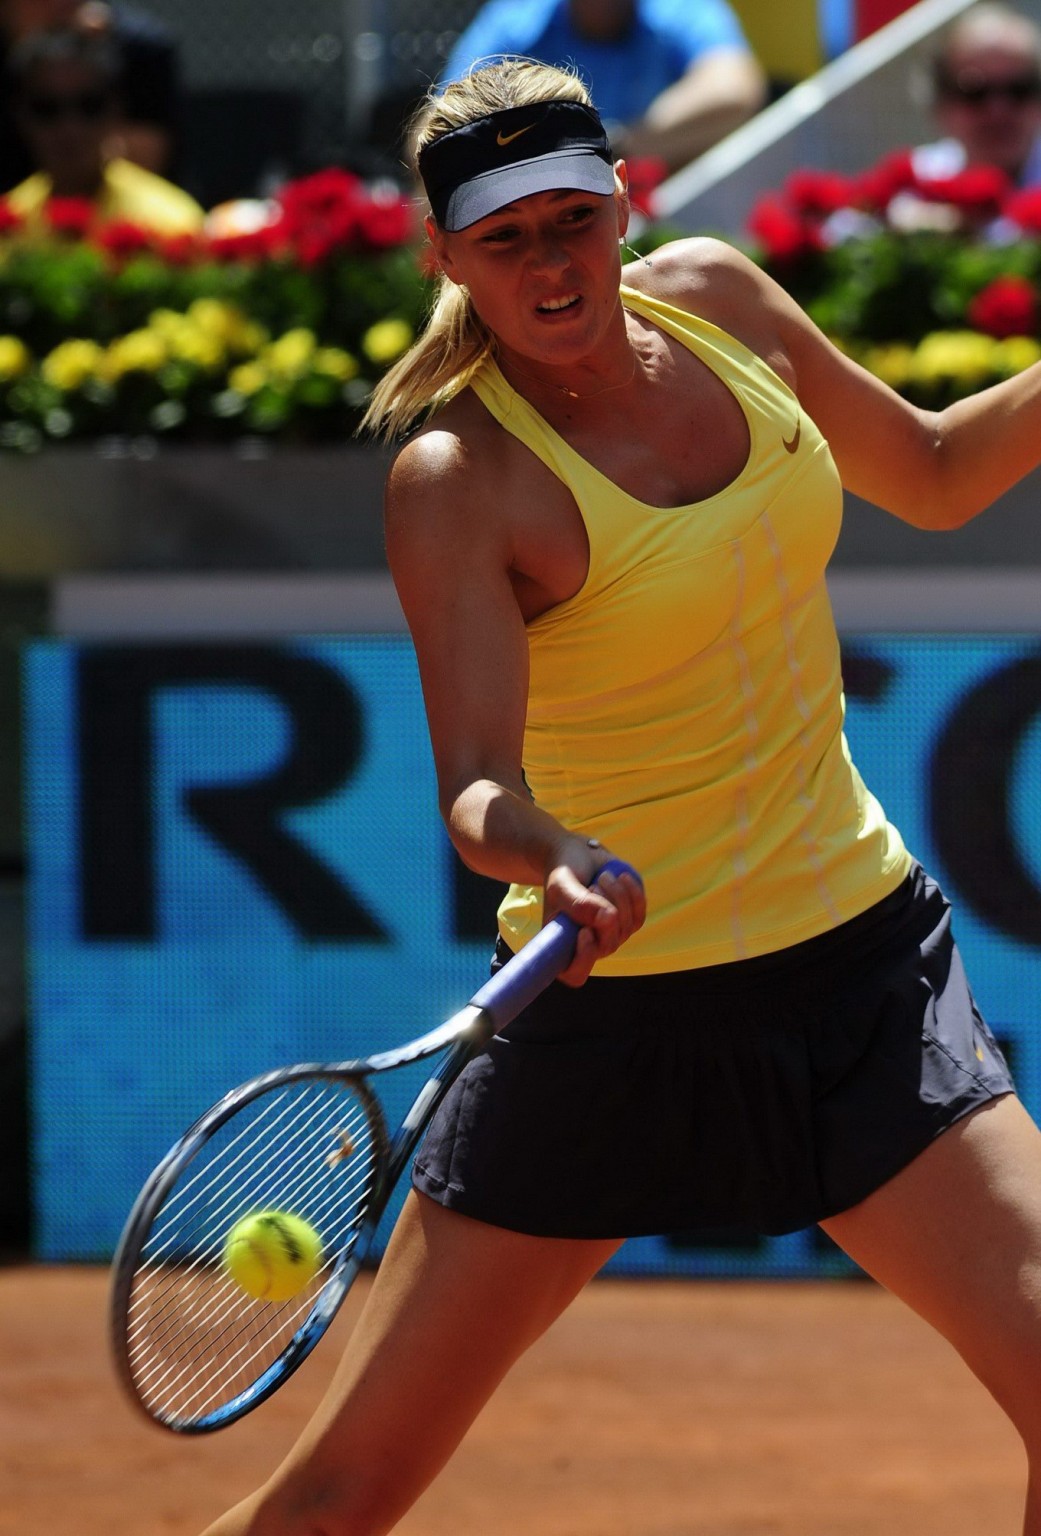 Maria Sharapova en jupe haute au tournoi des 'masters' de Madrid
 #75305215